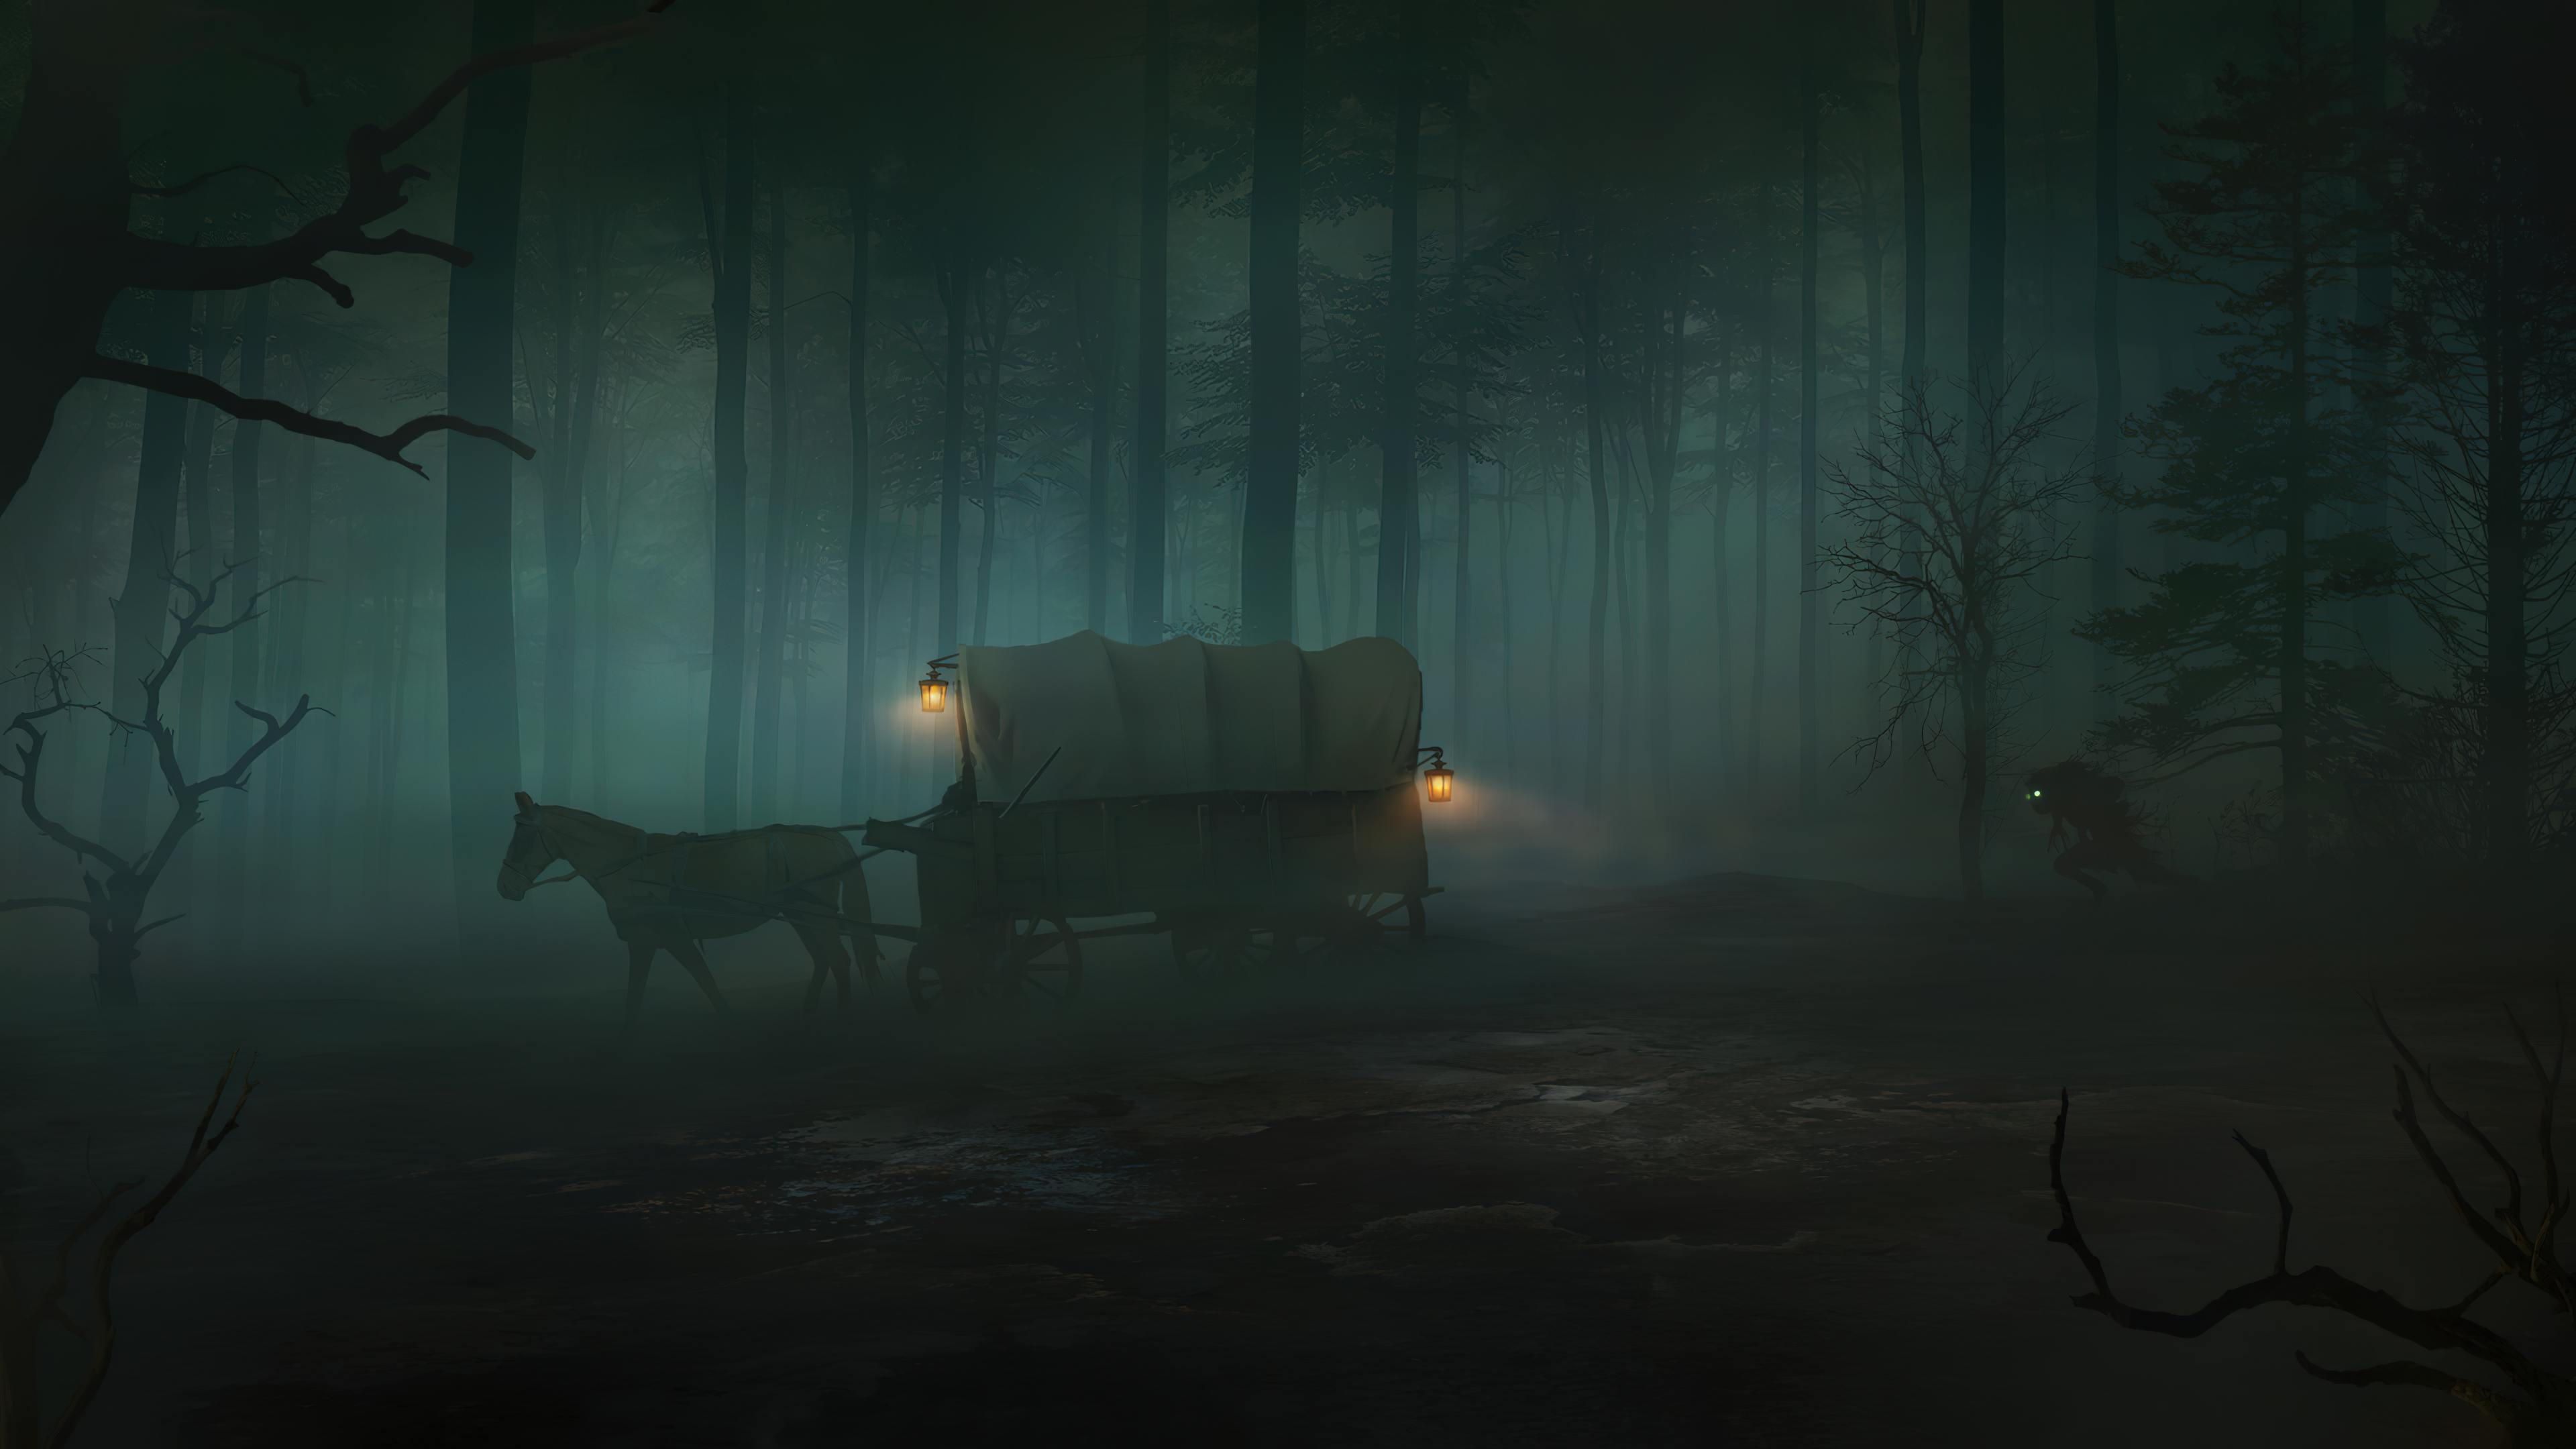 General 3840x2160 horse lamp lantern forest night creature mist dark digital art low light